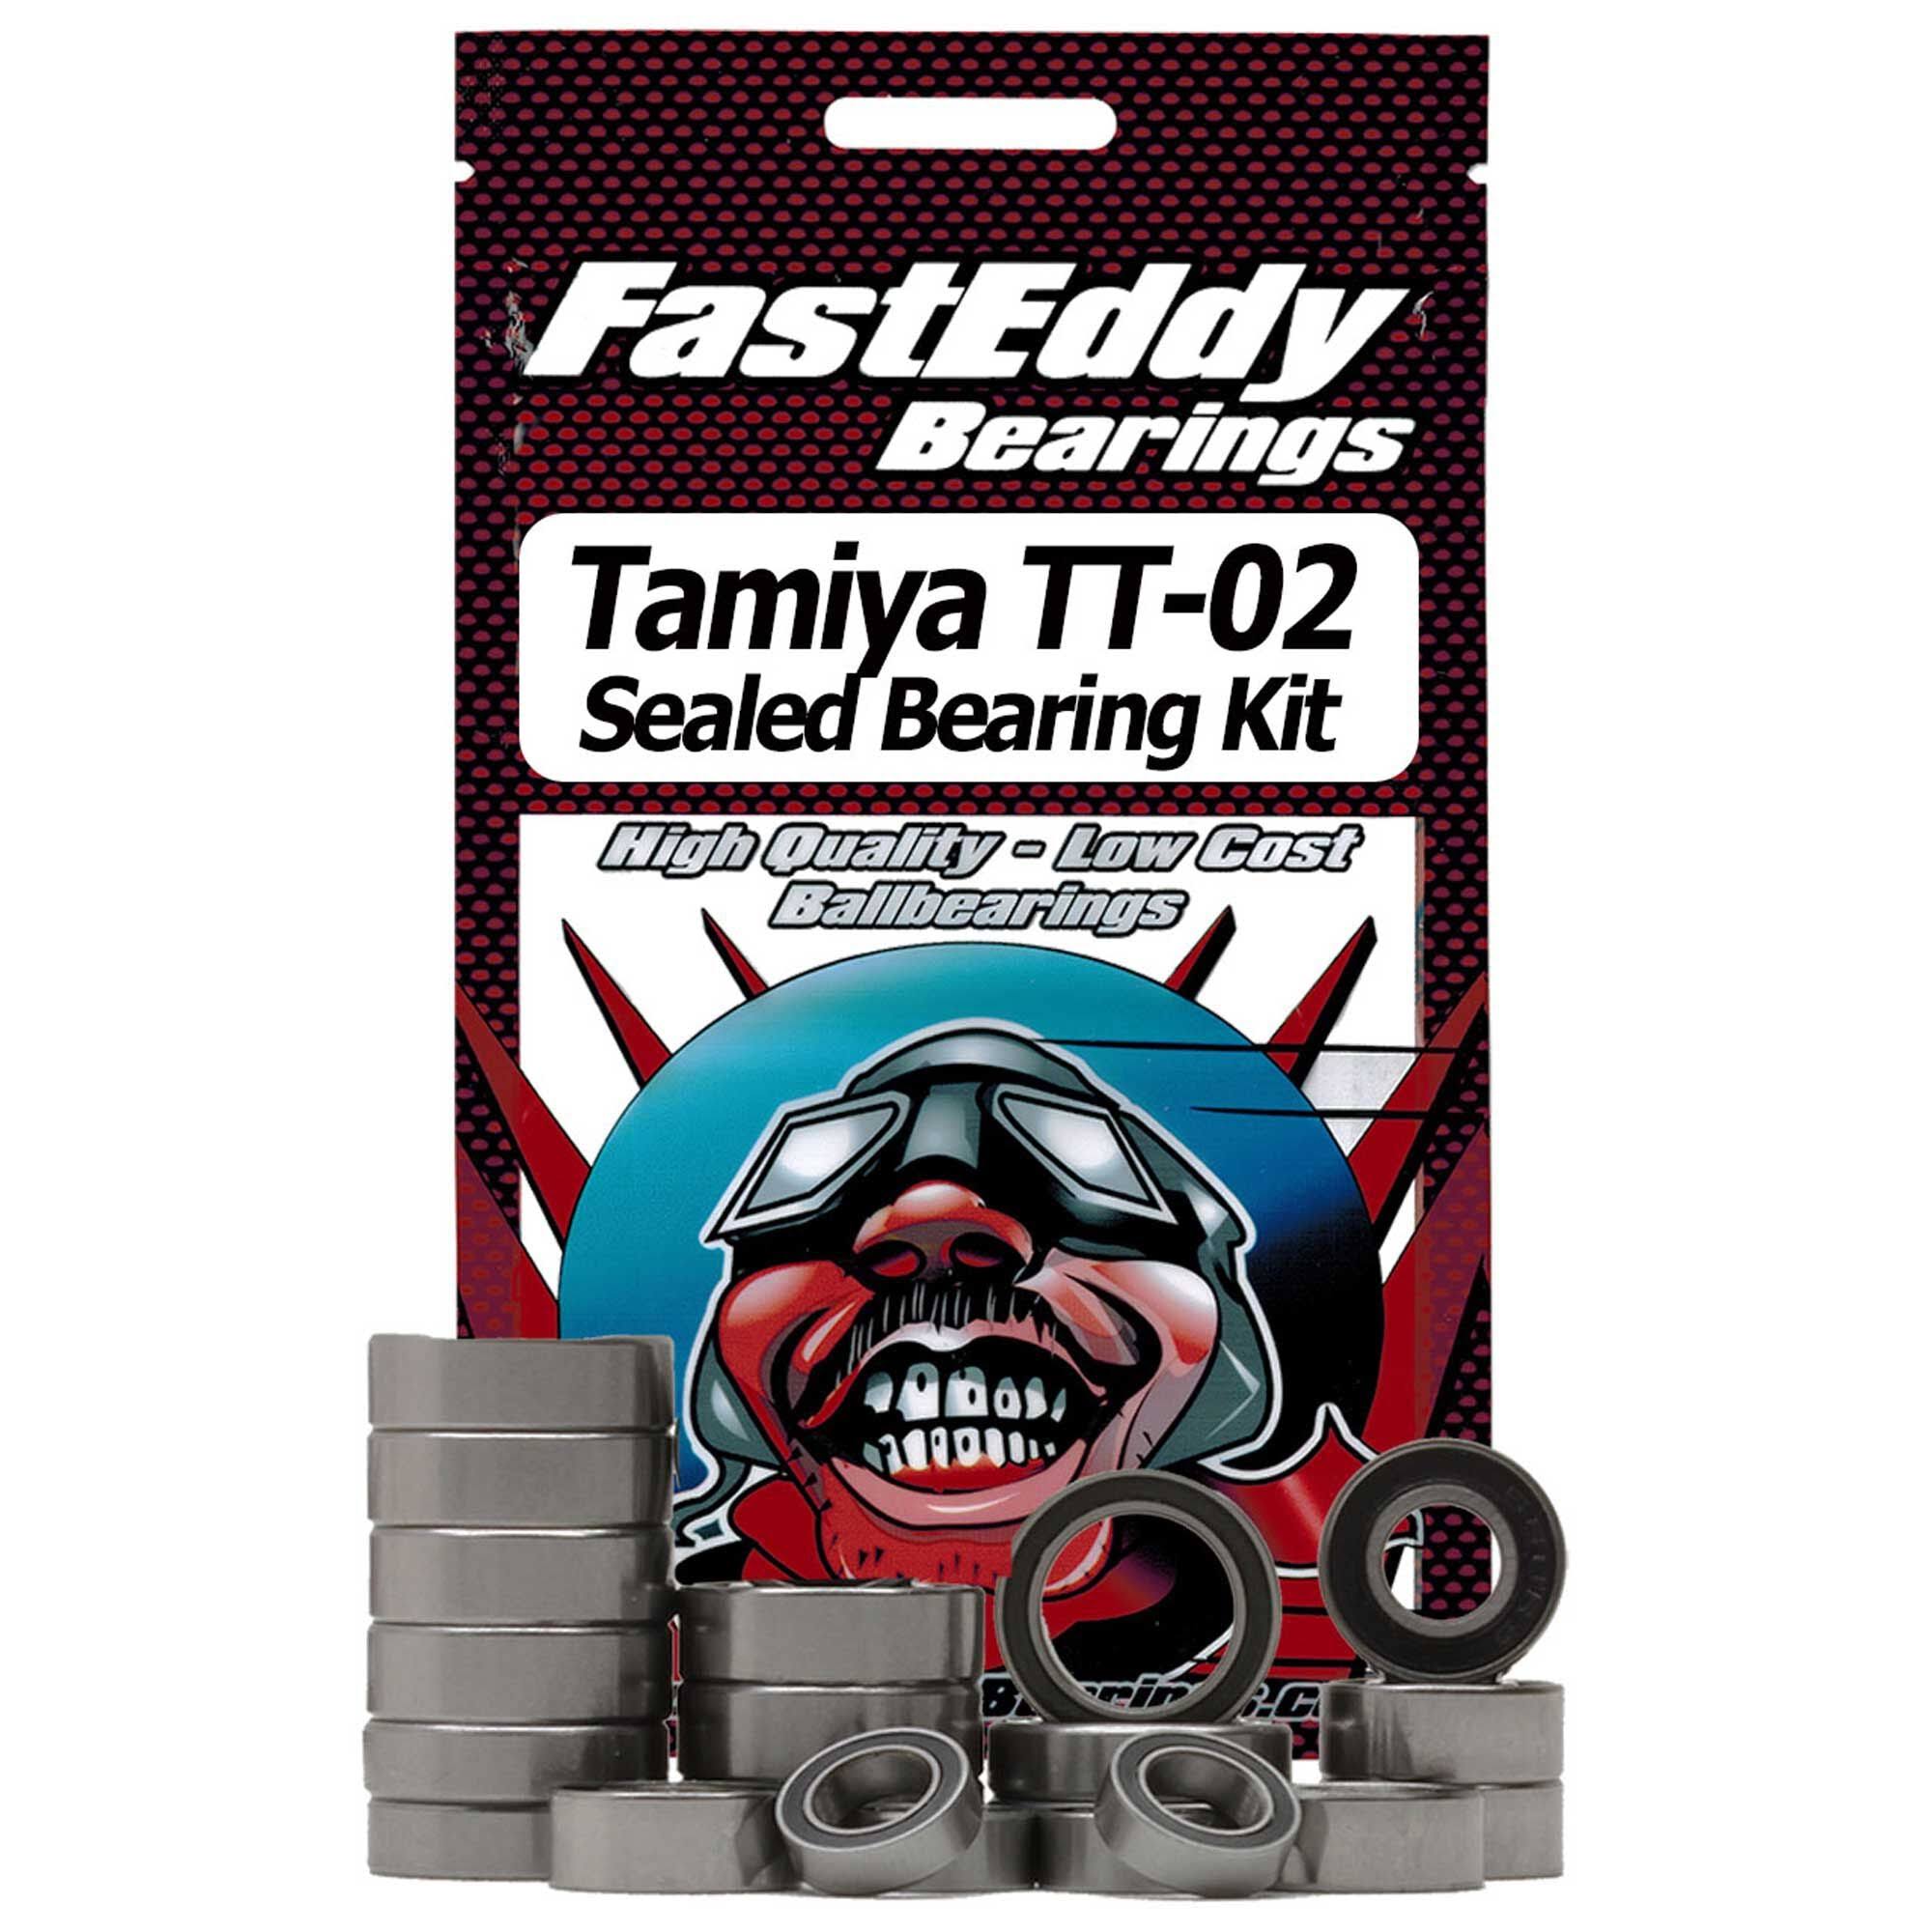 FastEddy Bearings Rubber Sealed Bearing Kit: Tamiya TT-02 Chassis, TFE